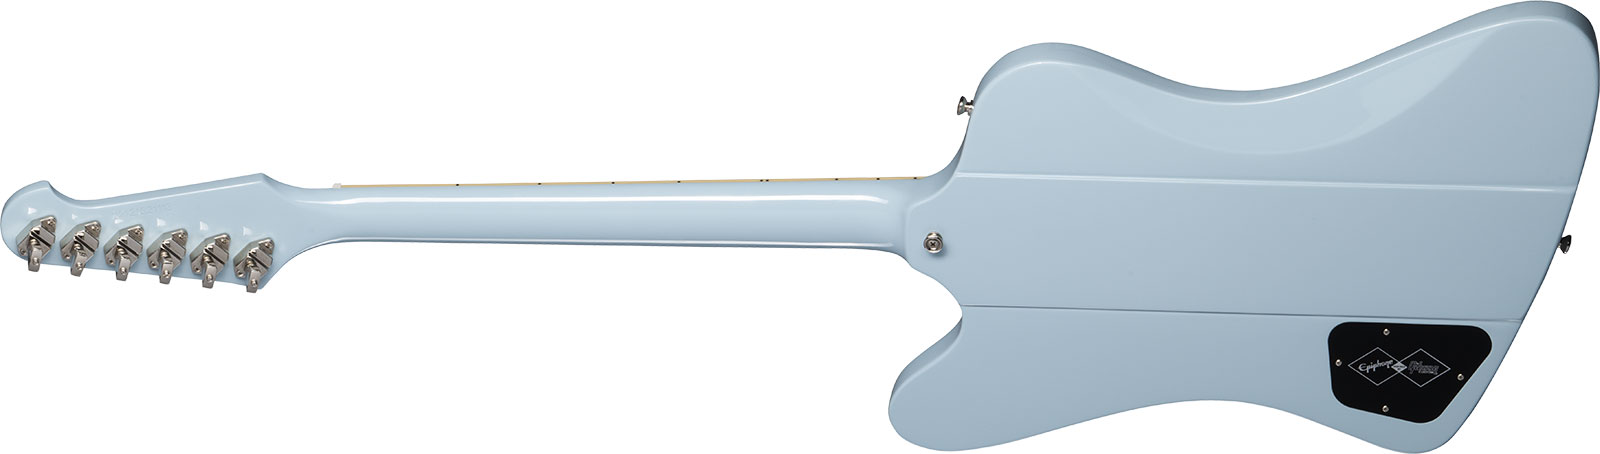 Epiphone Firebird V 1963 Maestro Vibrola Inspired By Gibson Custom 2mh Trem Lau - Frost Blue - Guitarra electrica retro rock - Variation 1